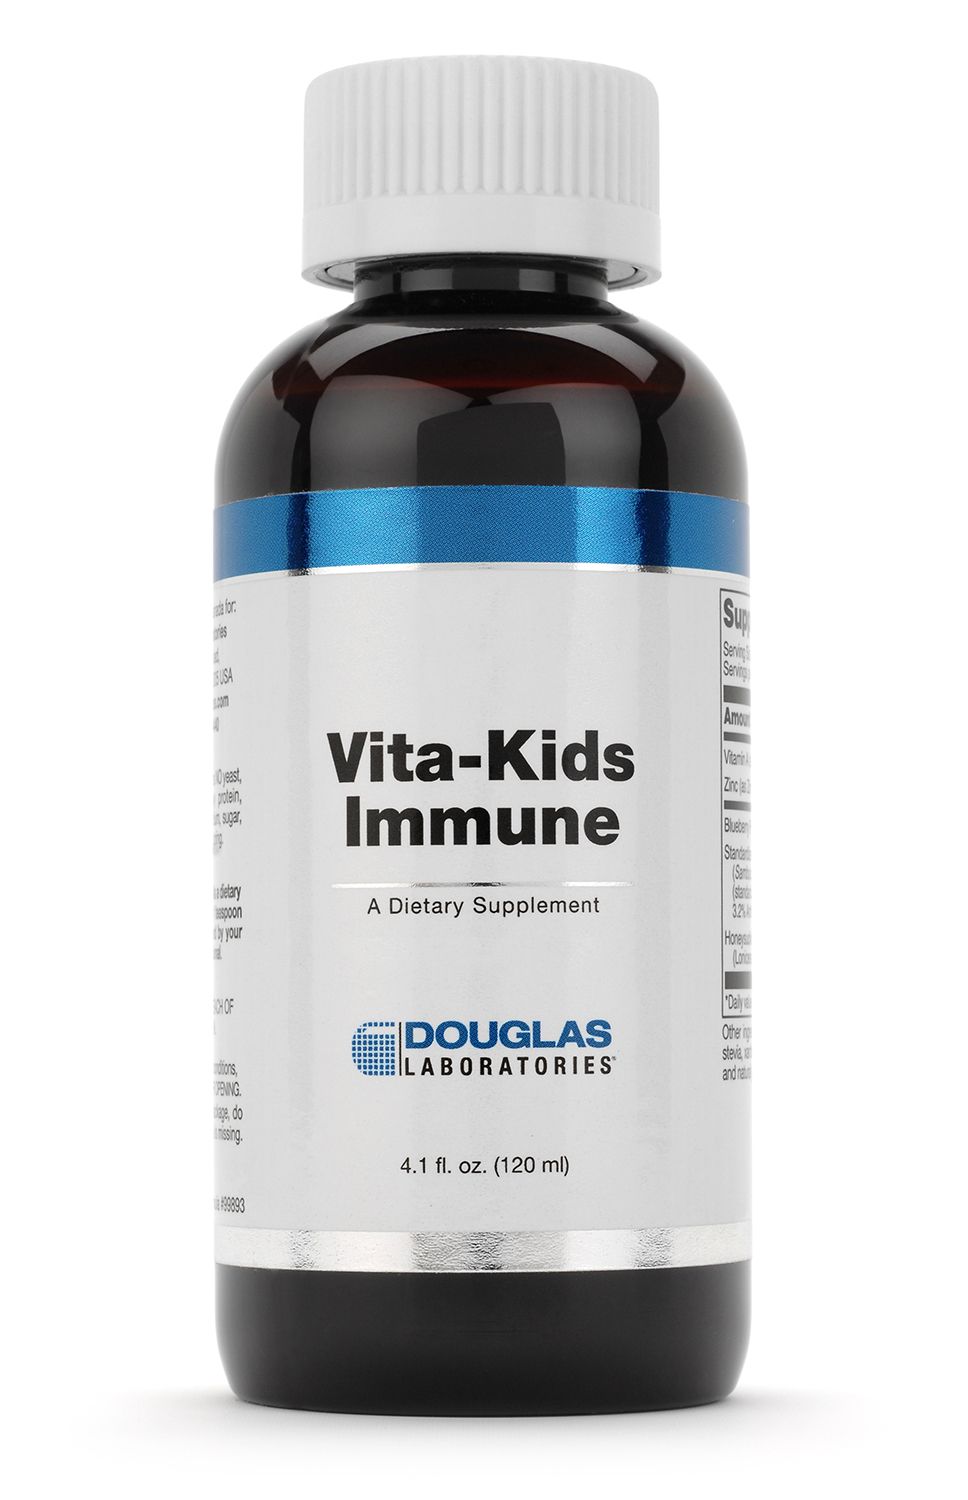 Vita-Kids Immune - USA only